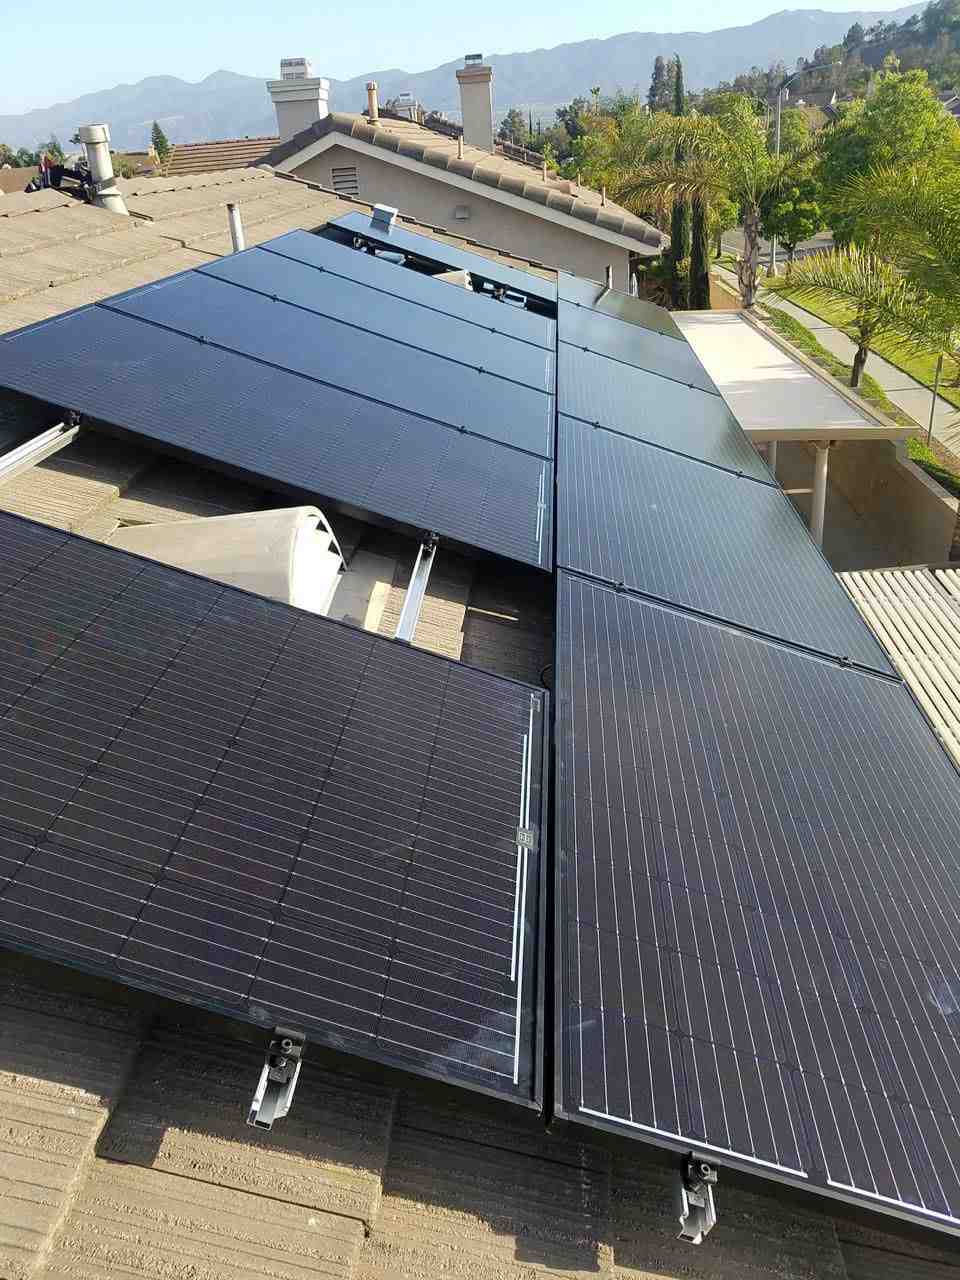 How do rented solar panels work?